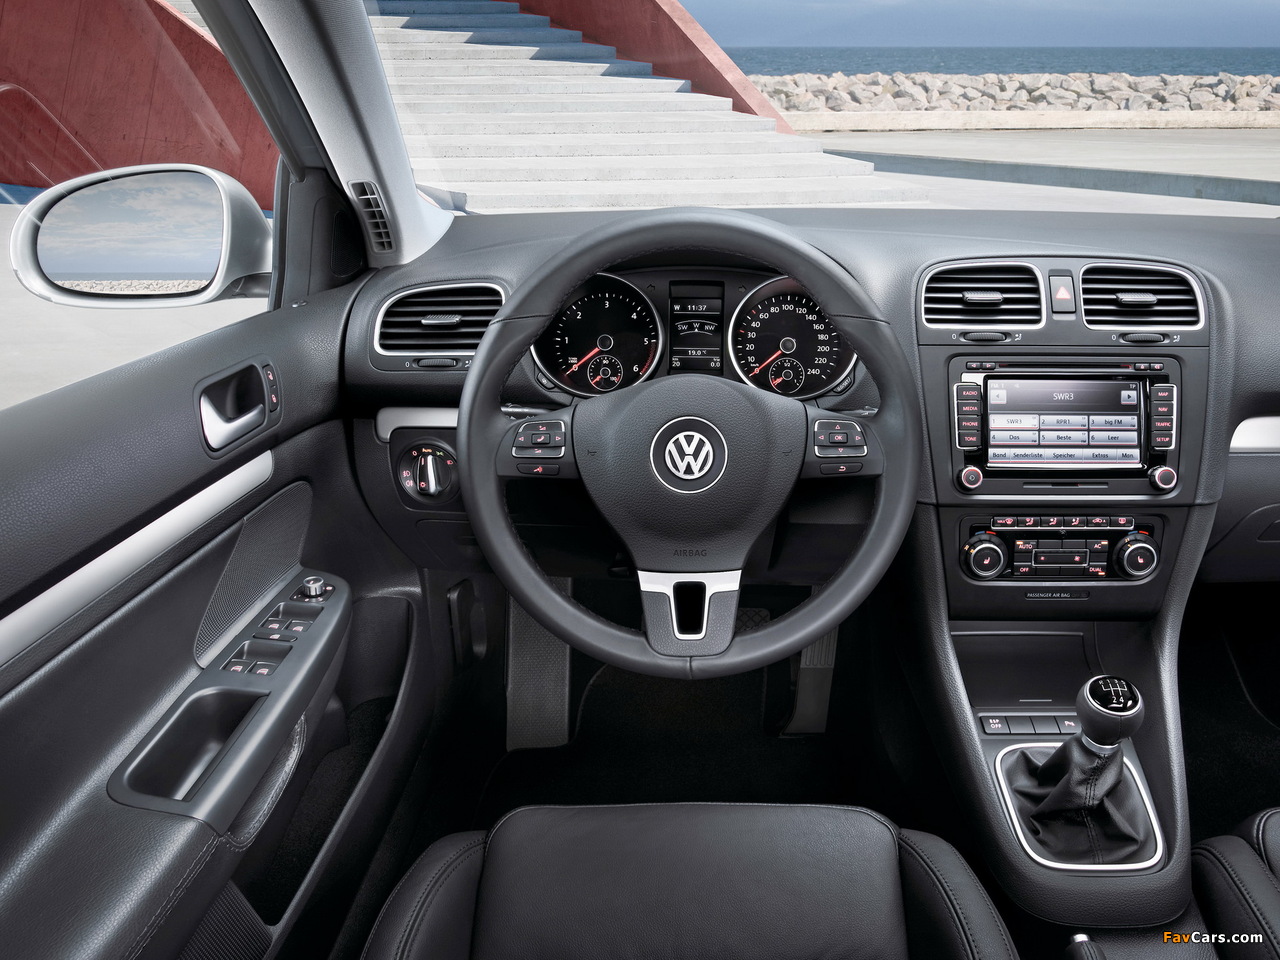 Volkswagen Golf Variant (Typ 5K) 2009 images (1280 x 960)